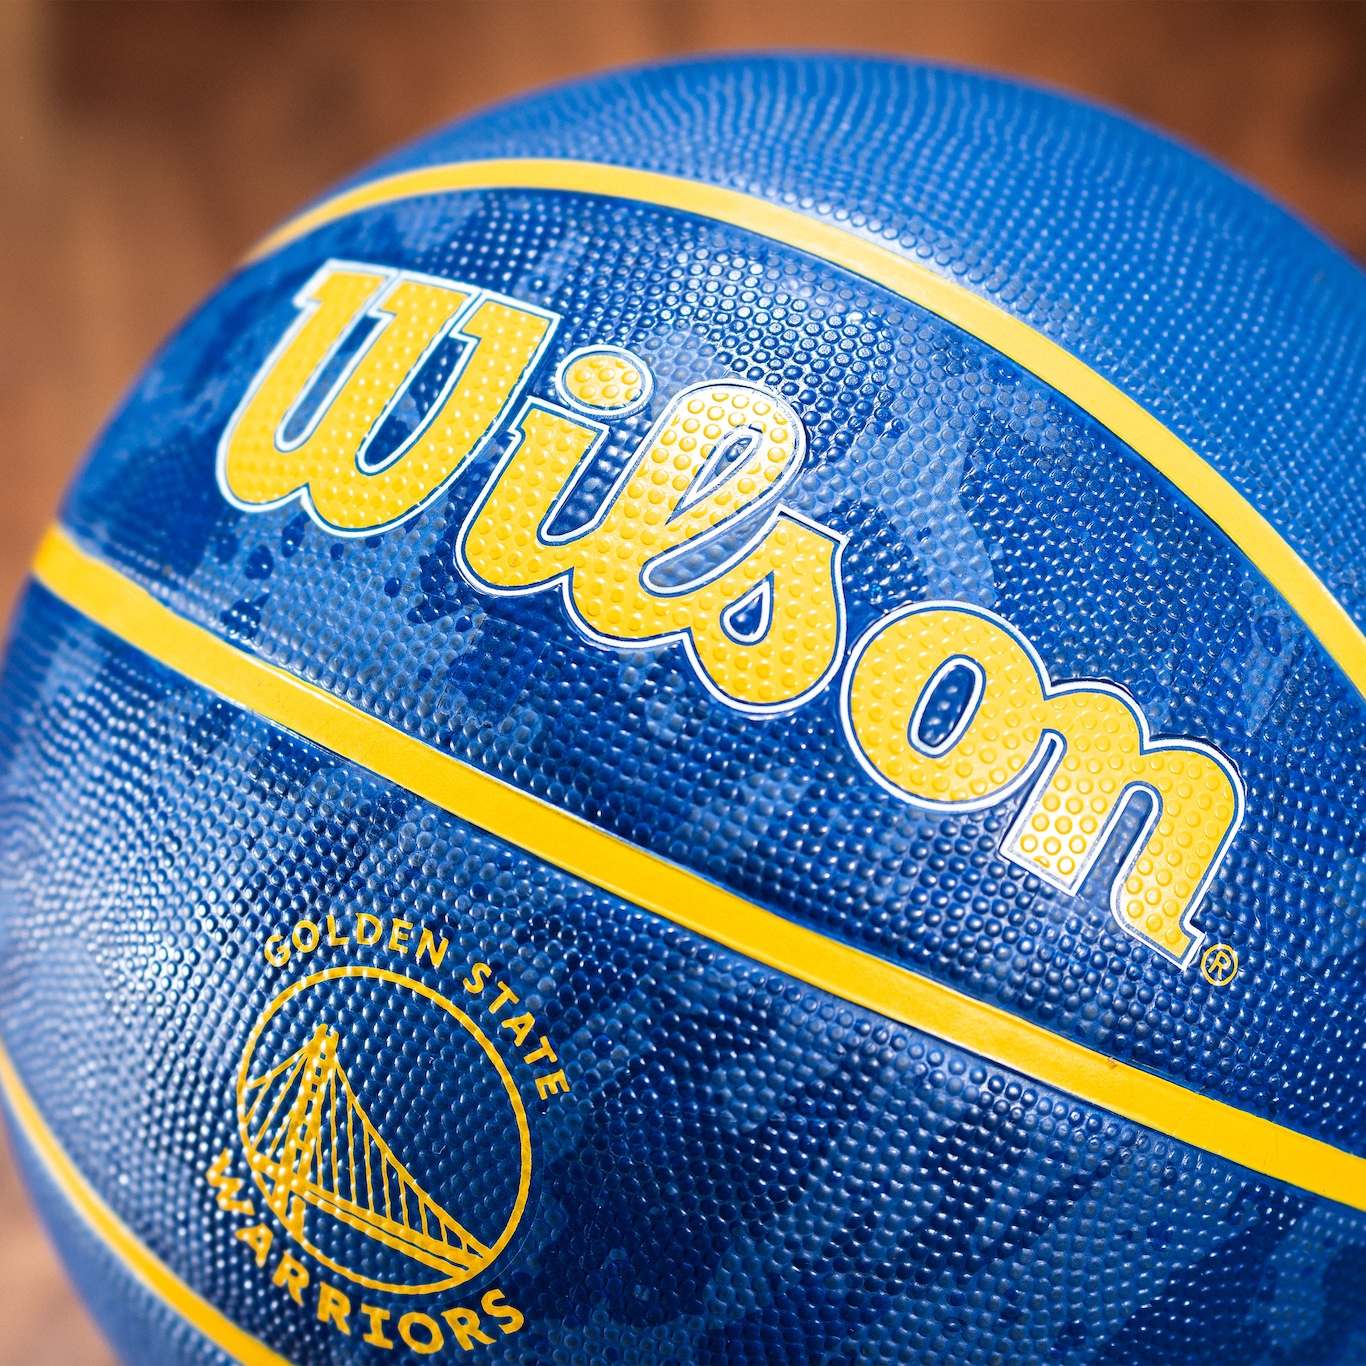 Bola De Basquete Wilson Team Tiedye NBA Celtis/Nets/Bulls/Warriors